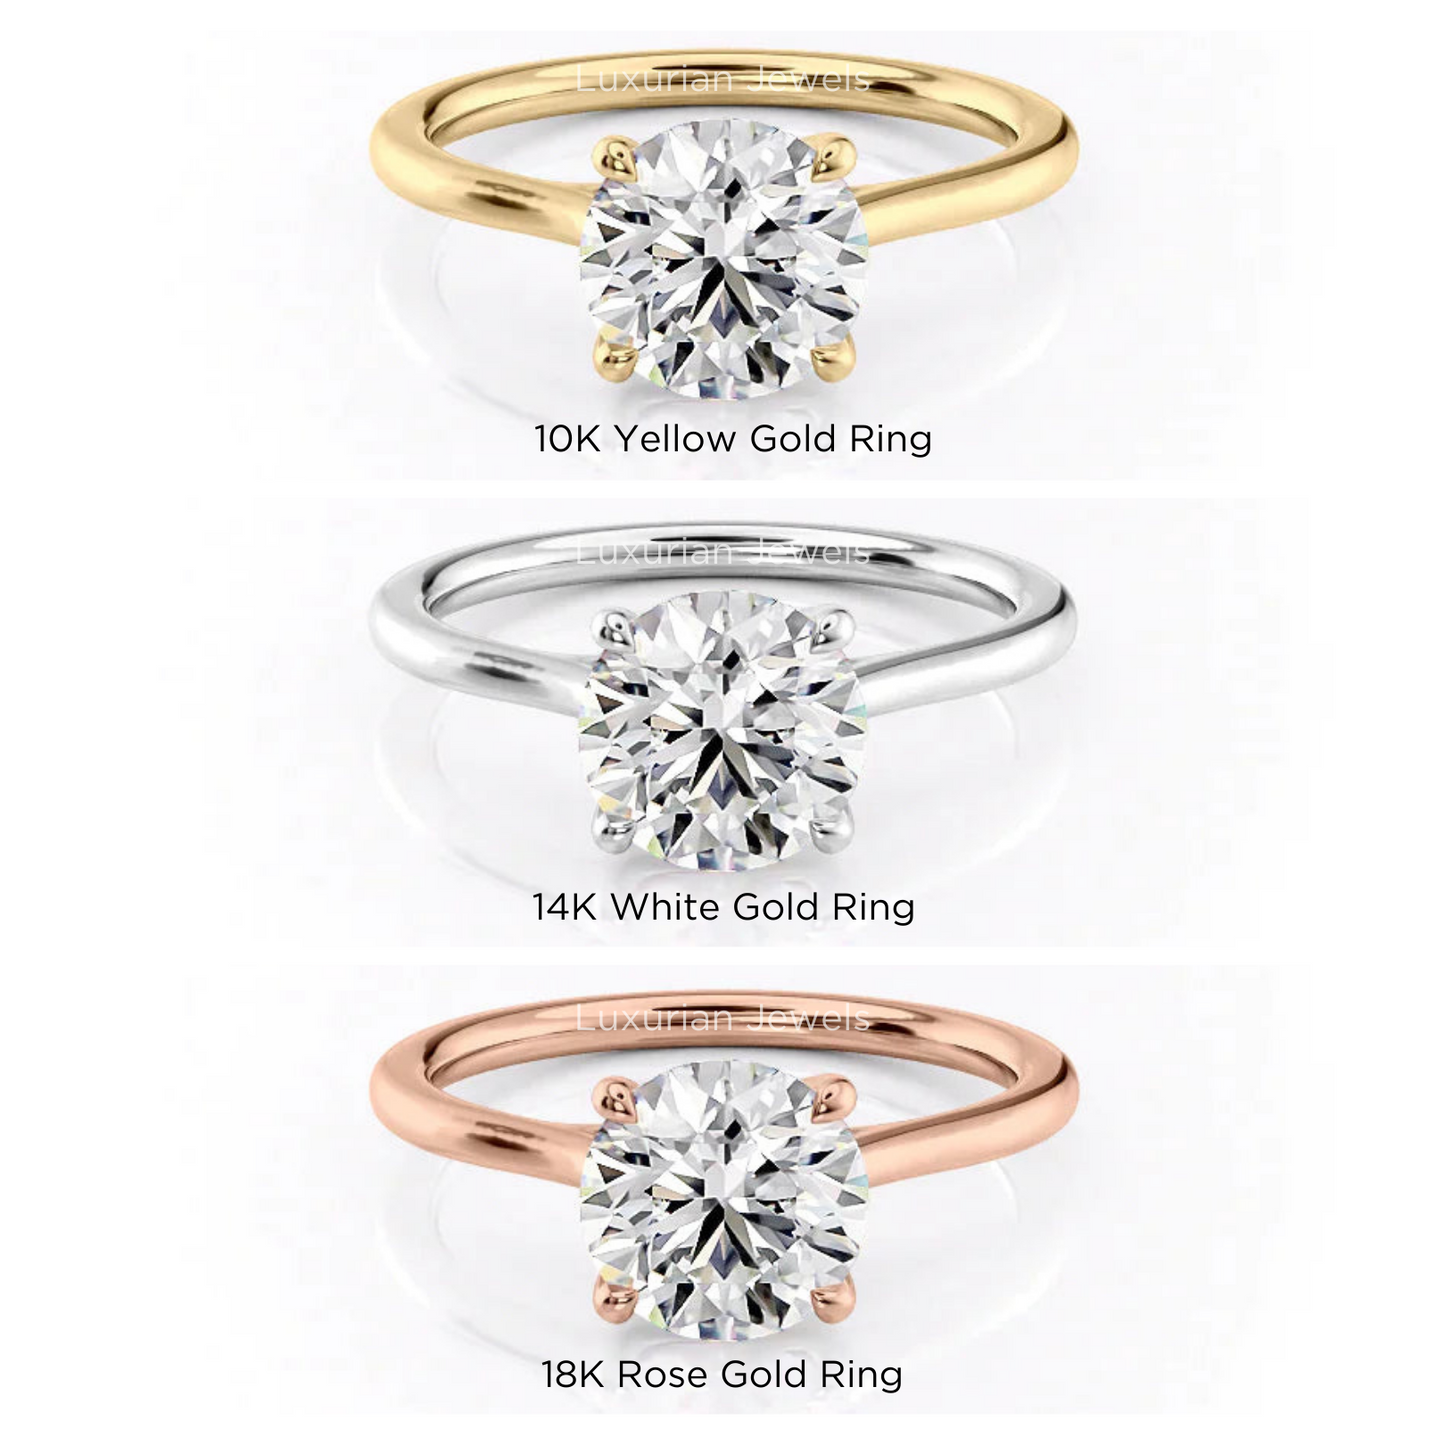 Round Diamond Solitaire Engagement Ring